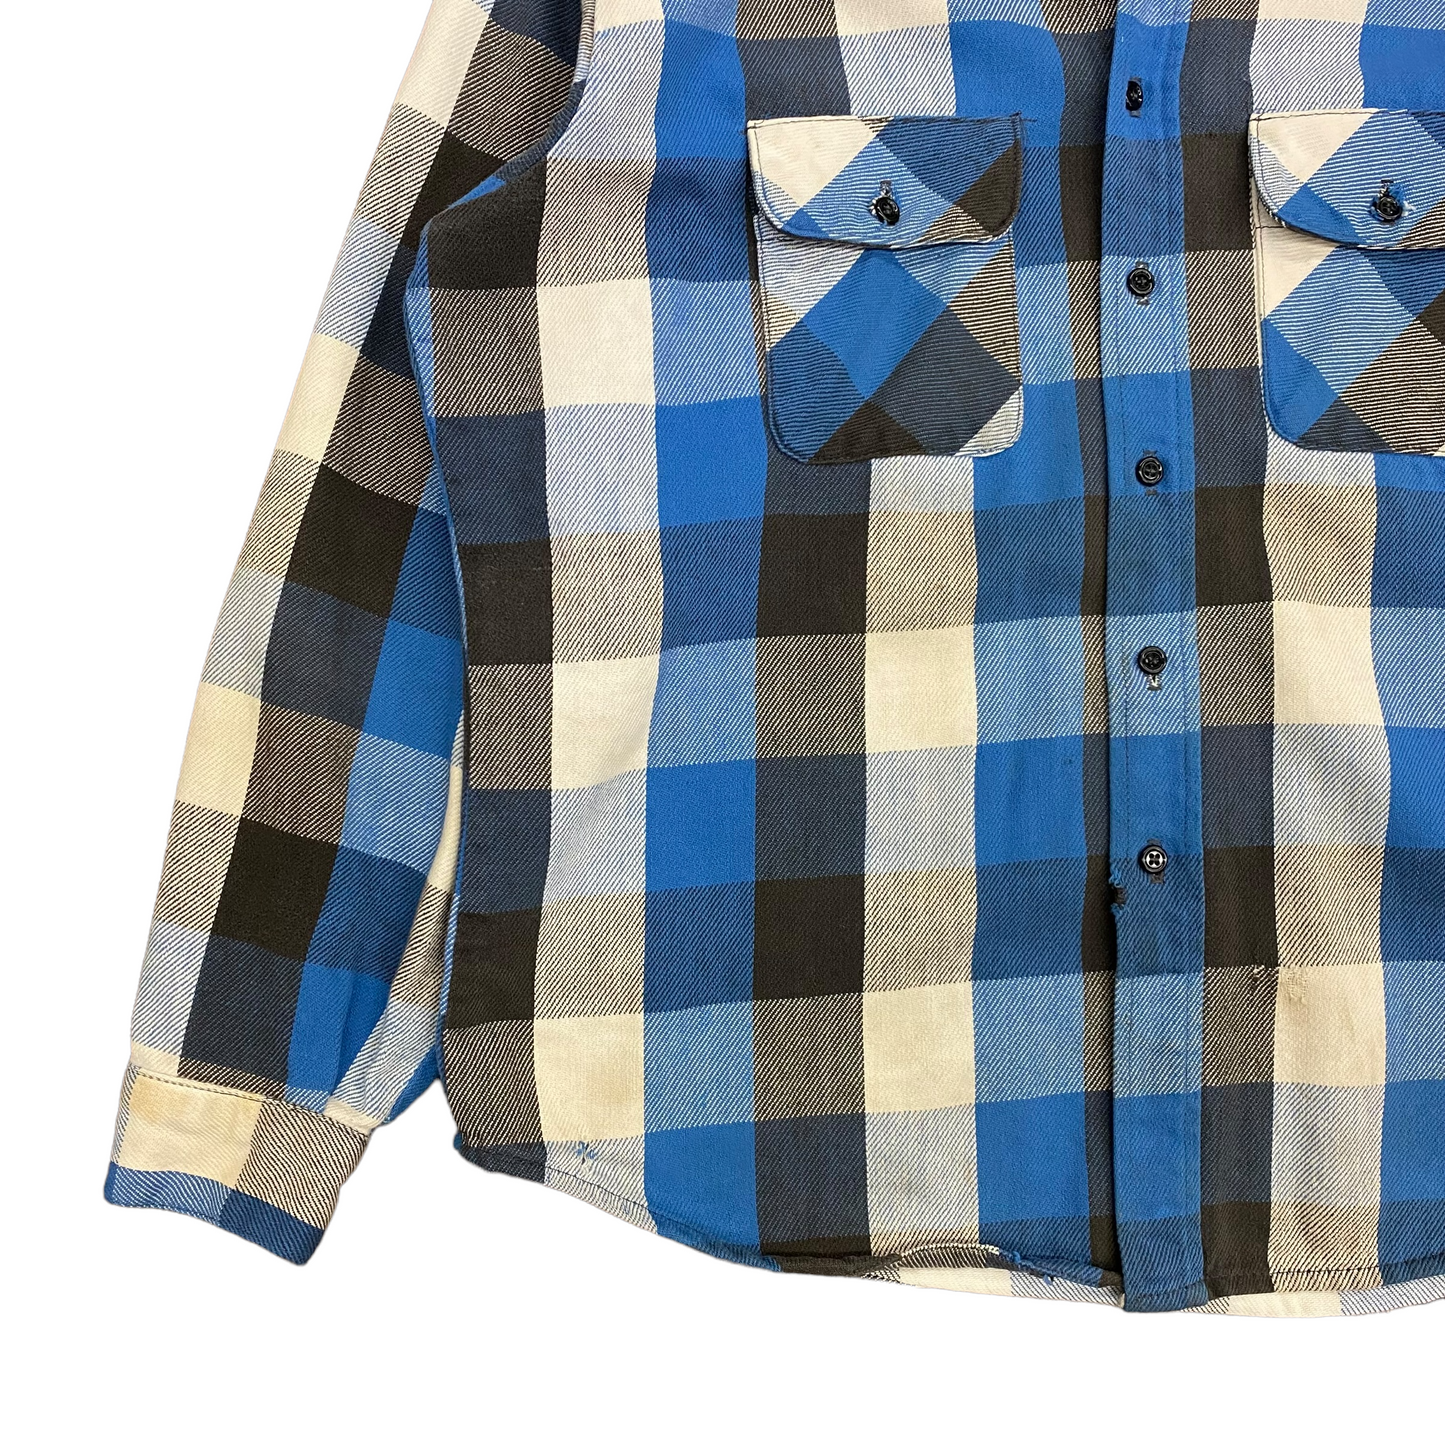 Vintage Five Brother Black & Blue Flannel Shirt - Size XL